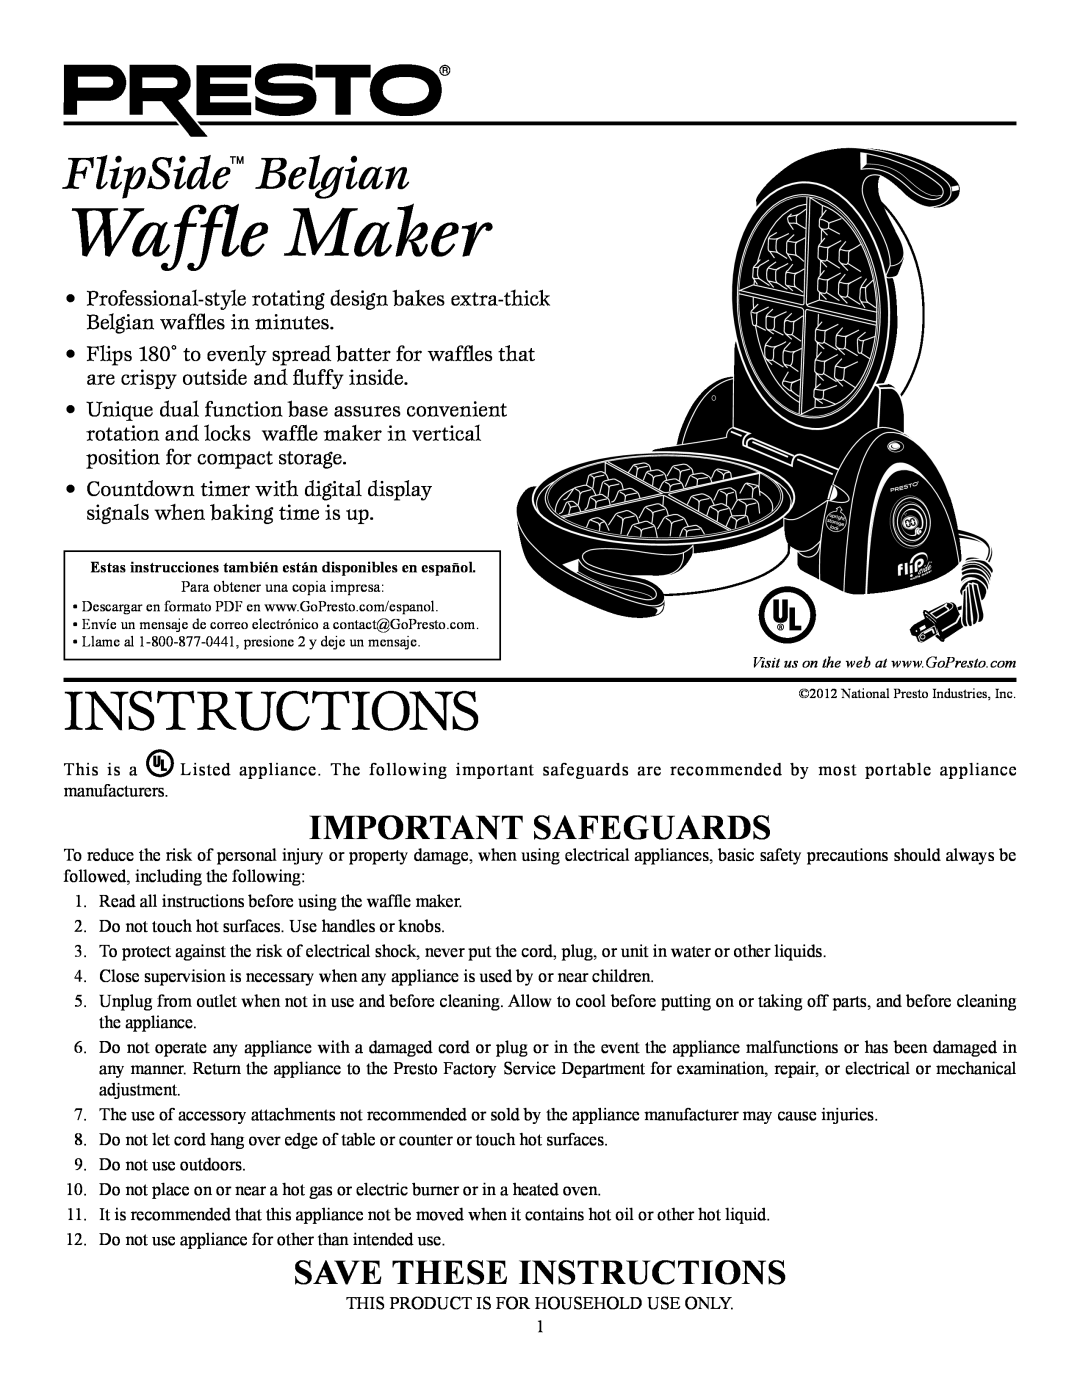 Presto P3510 manual Wafﬂe Maker, FlipSide Belgian, Important Safeguards, Save These Instructions 